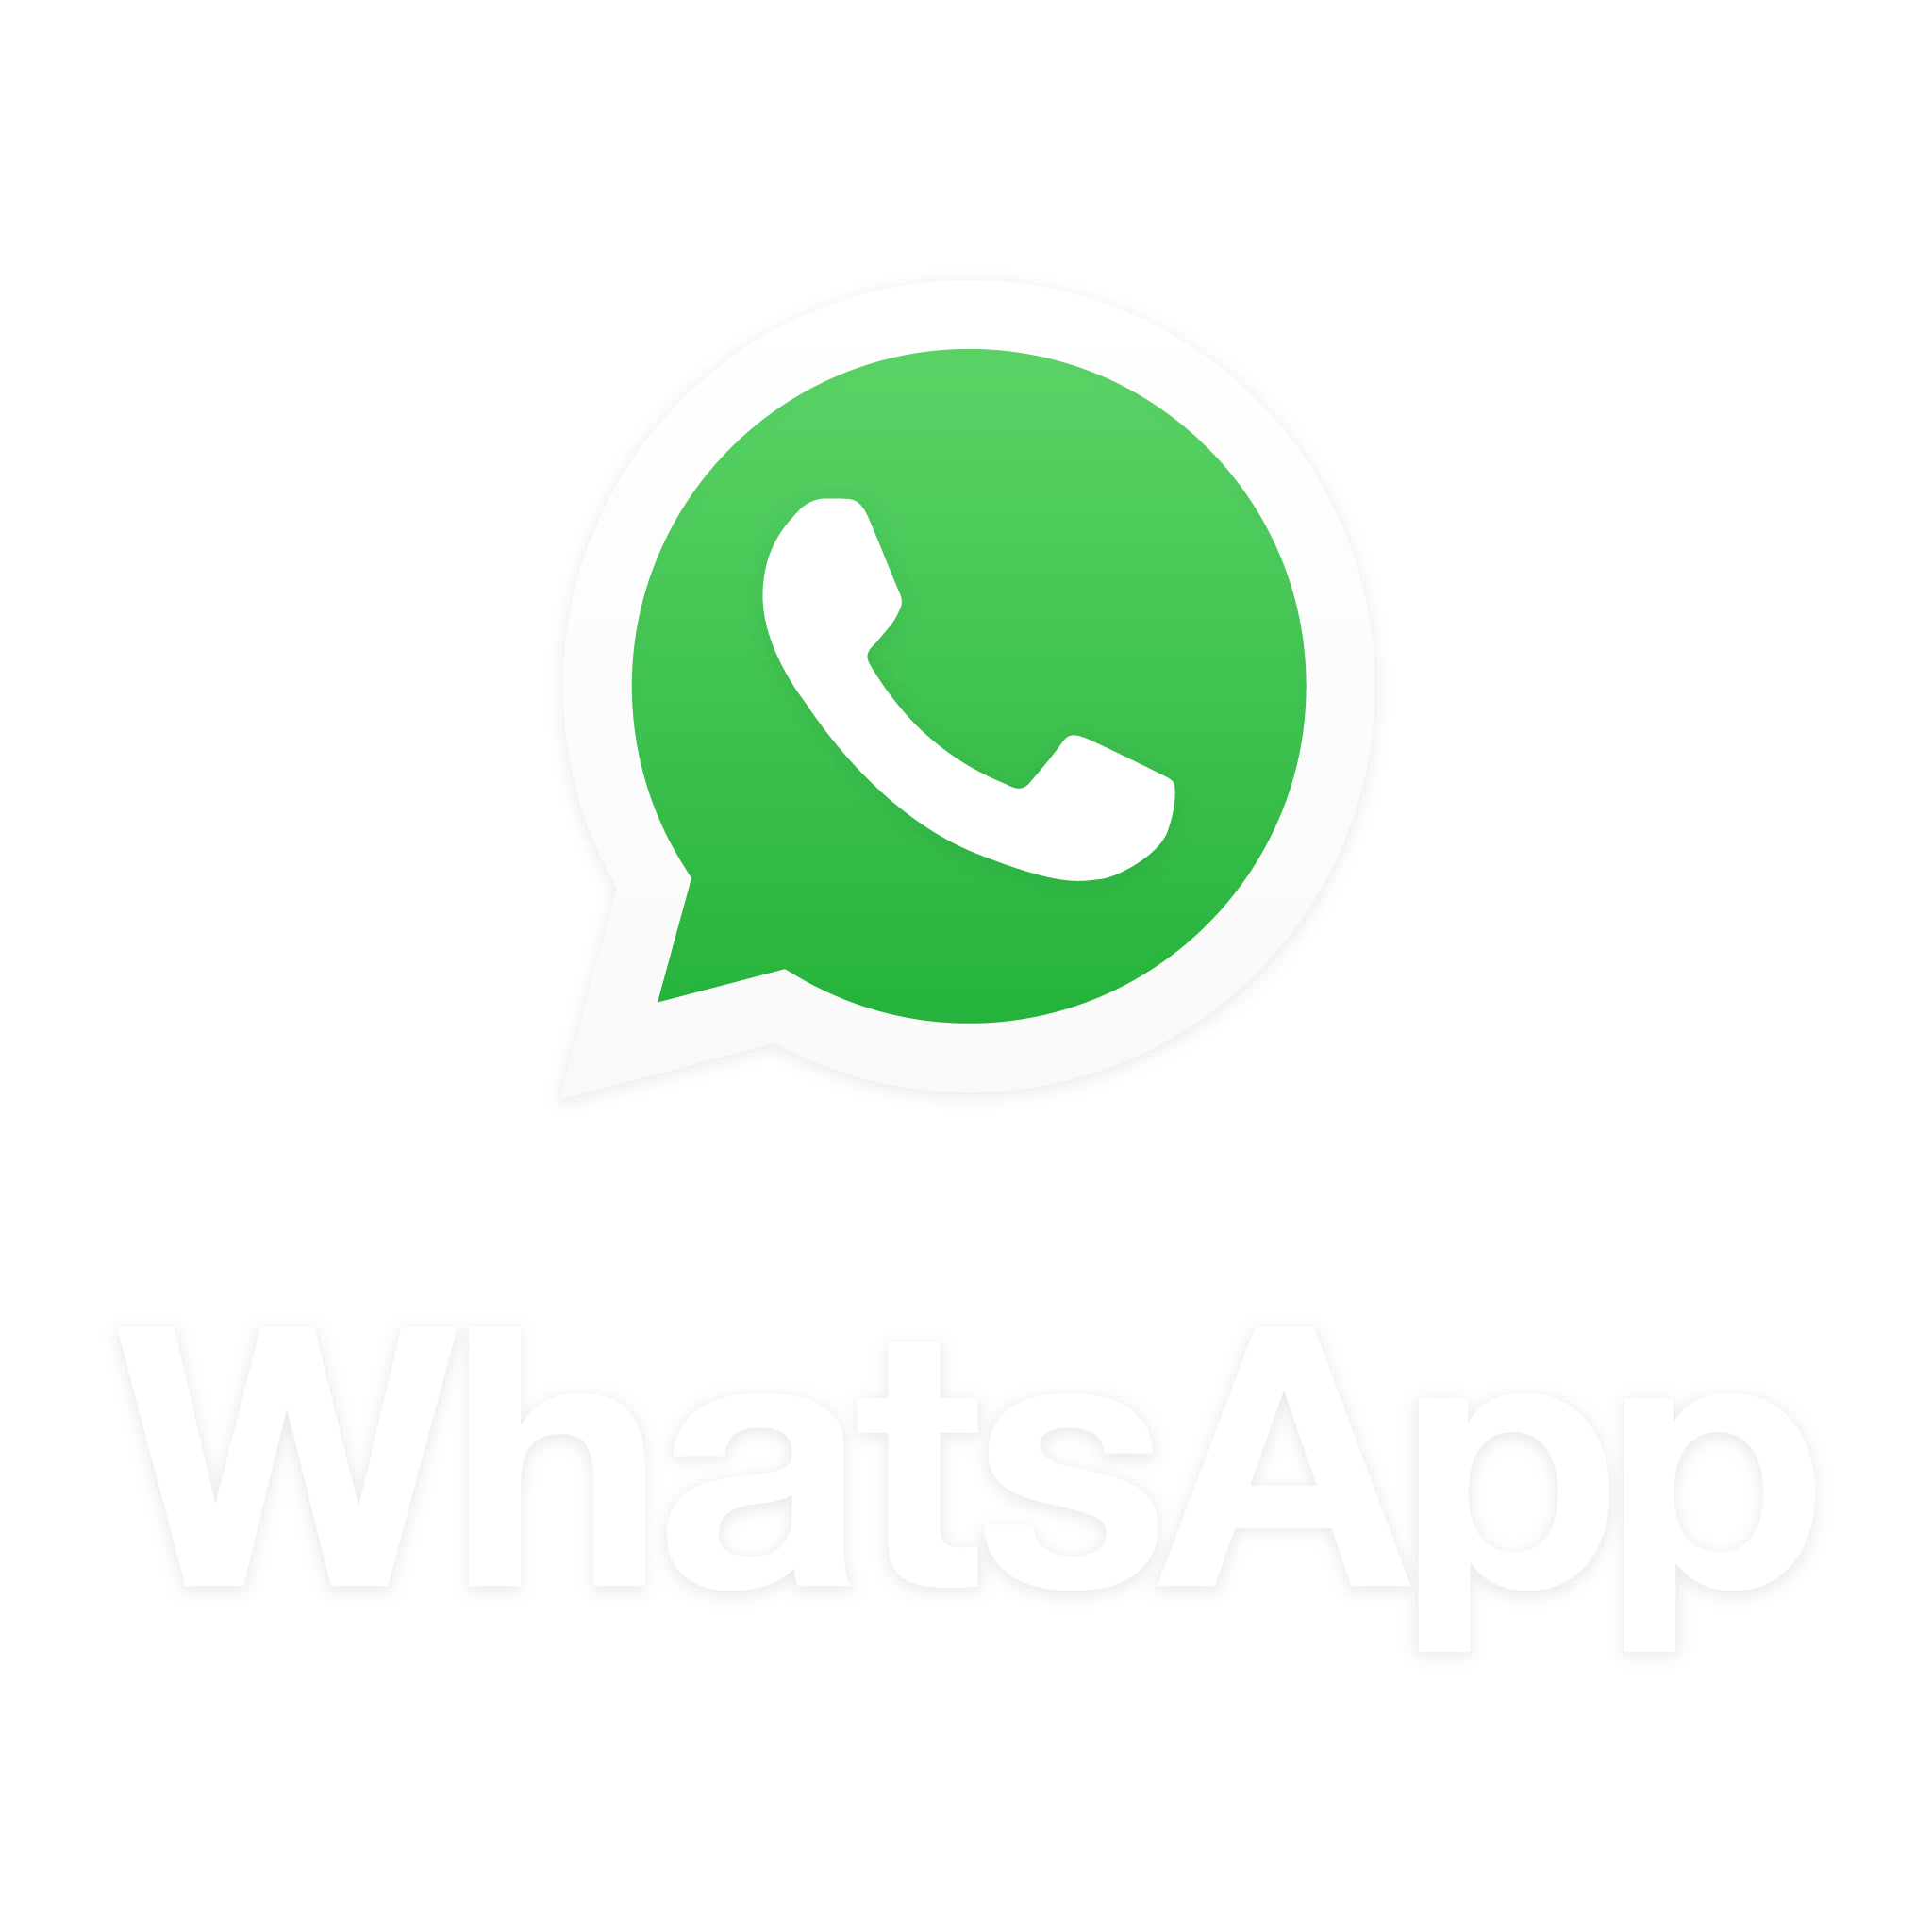 Whatsapp Logo Png Whatsapp Png Icone Whatsapp Imagens Para Whatsapp Images